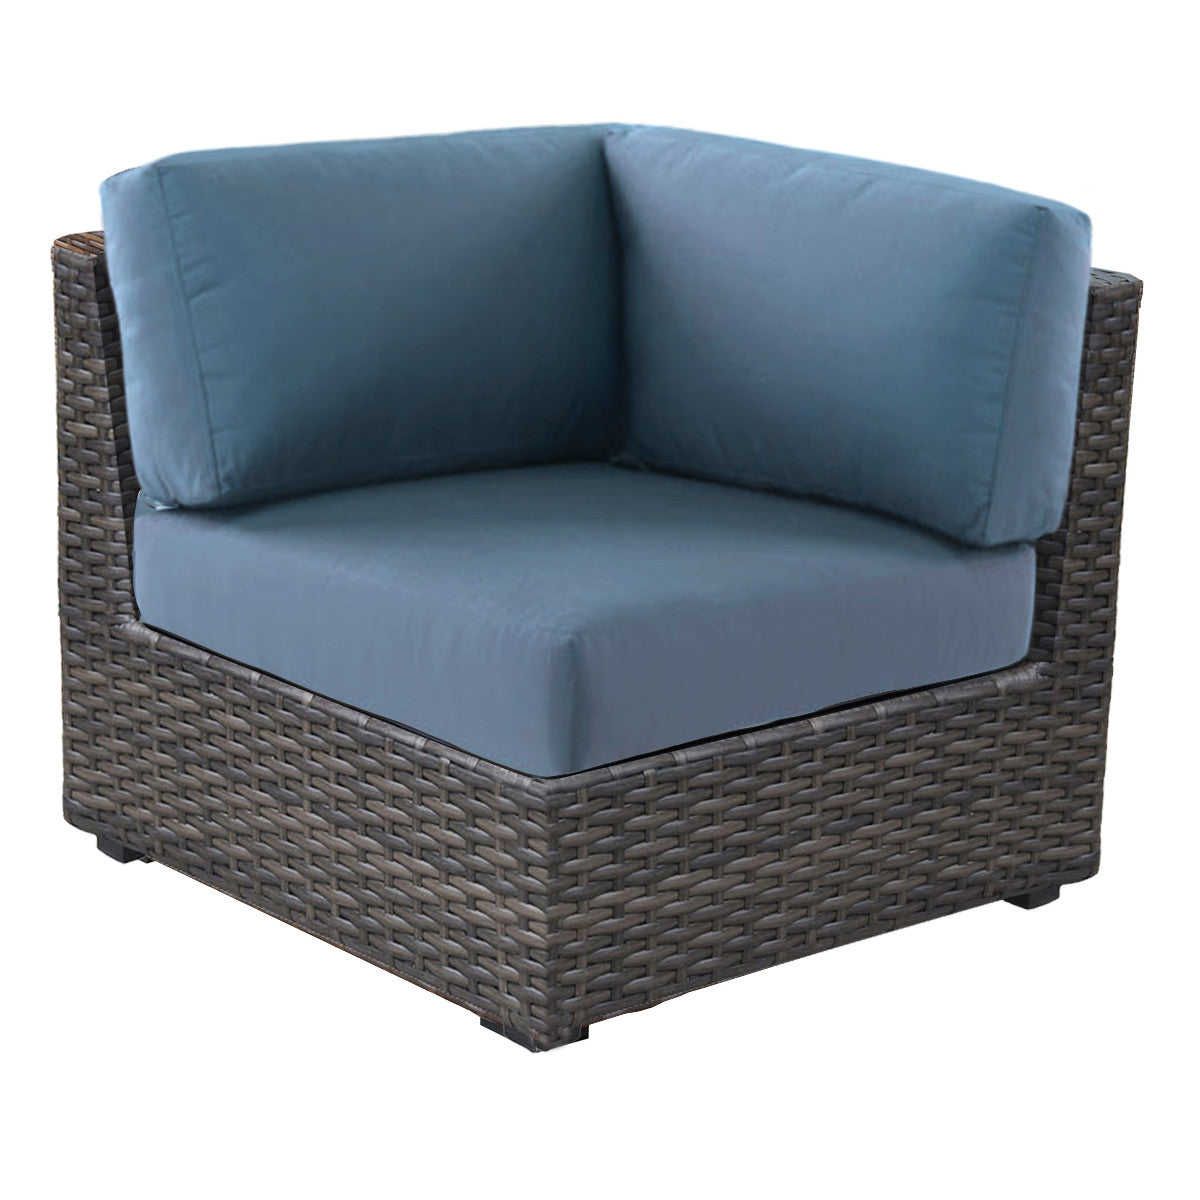 Forever Patio Horizon Wicker Sectional Corner Chair